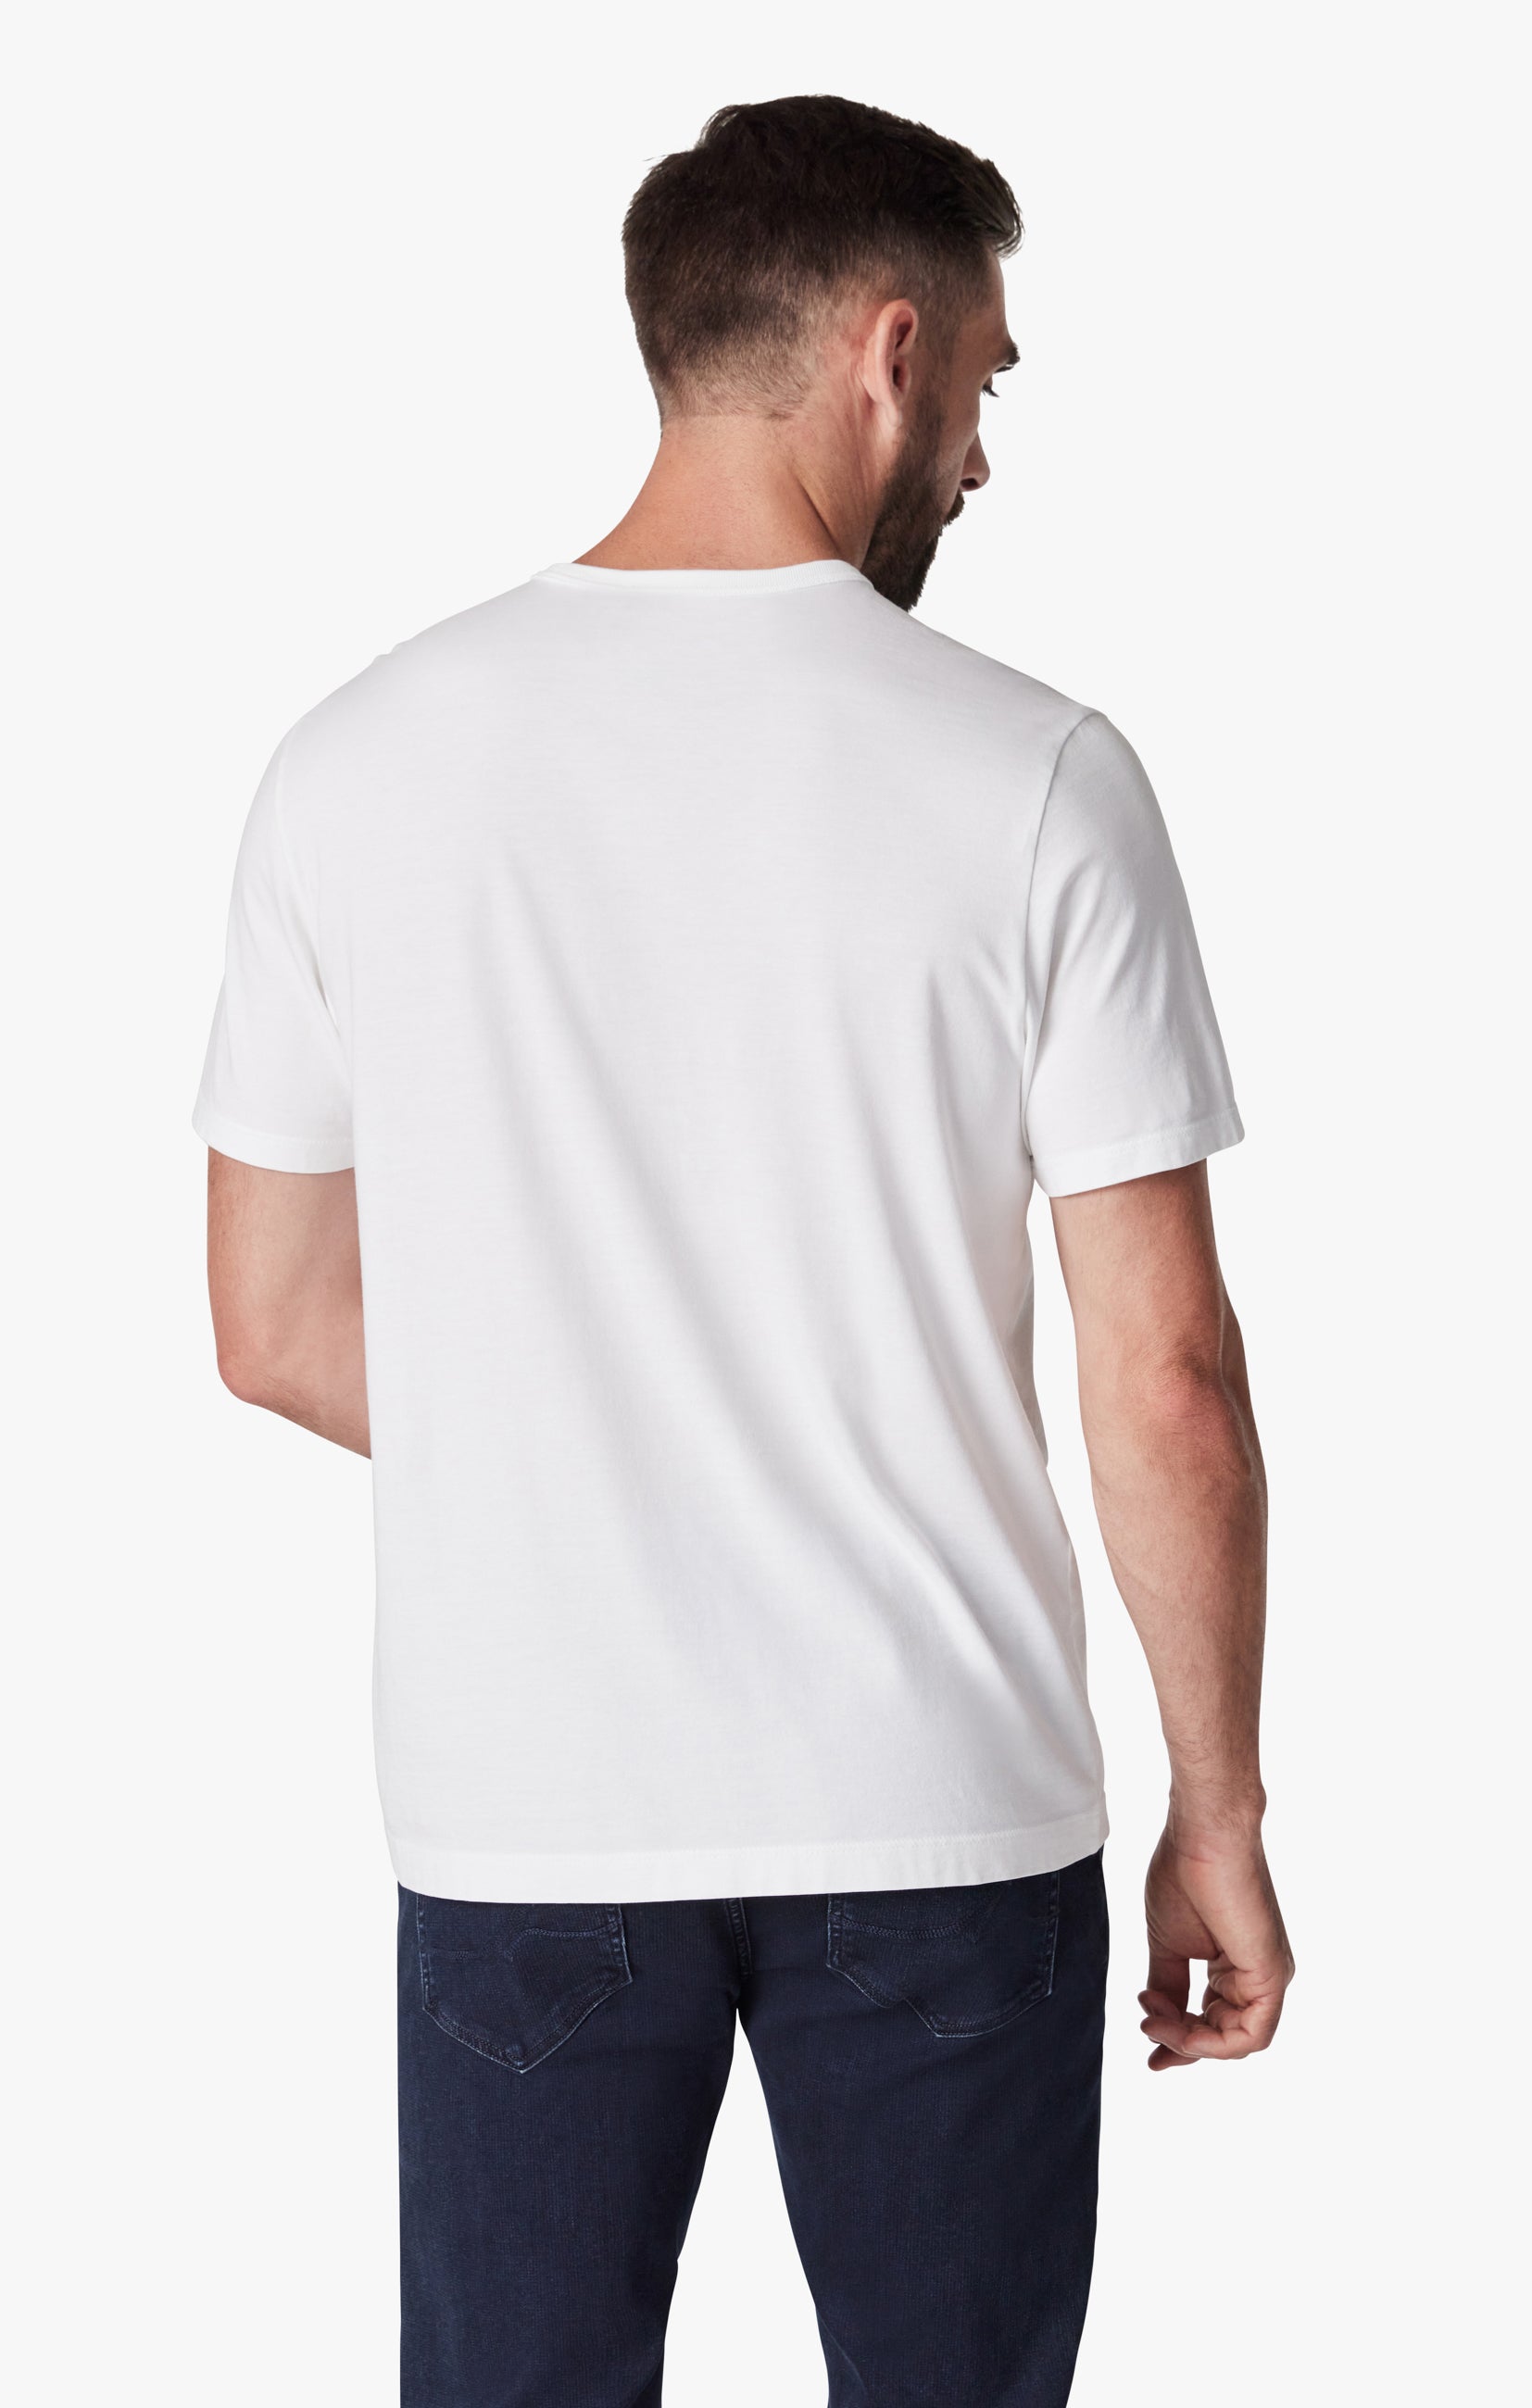 Basic Crew Neck T-Shirt in White Image 4